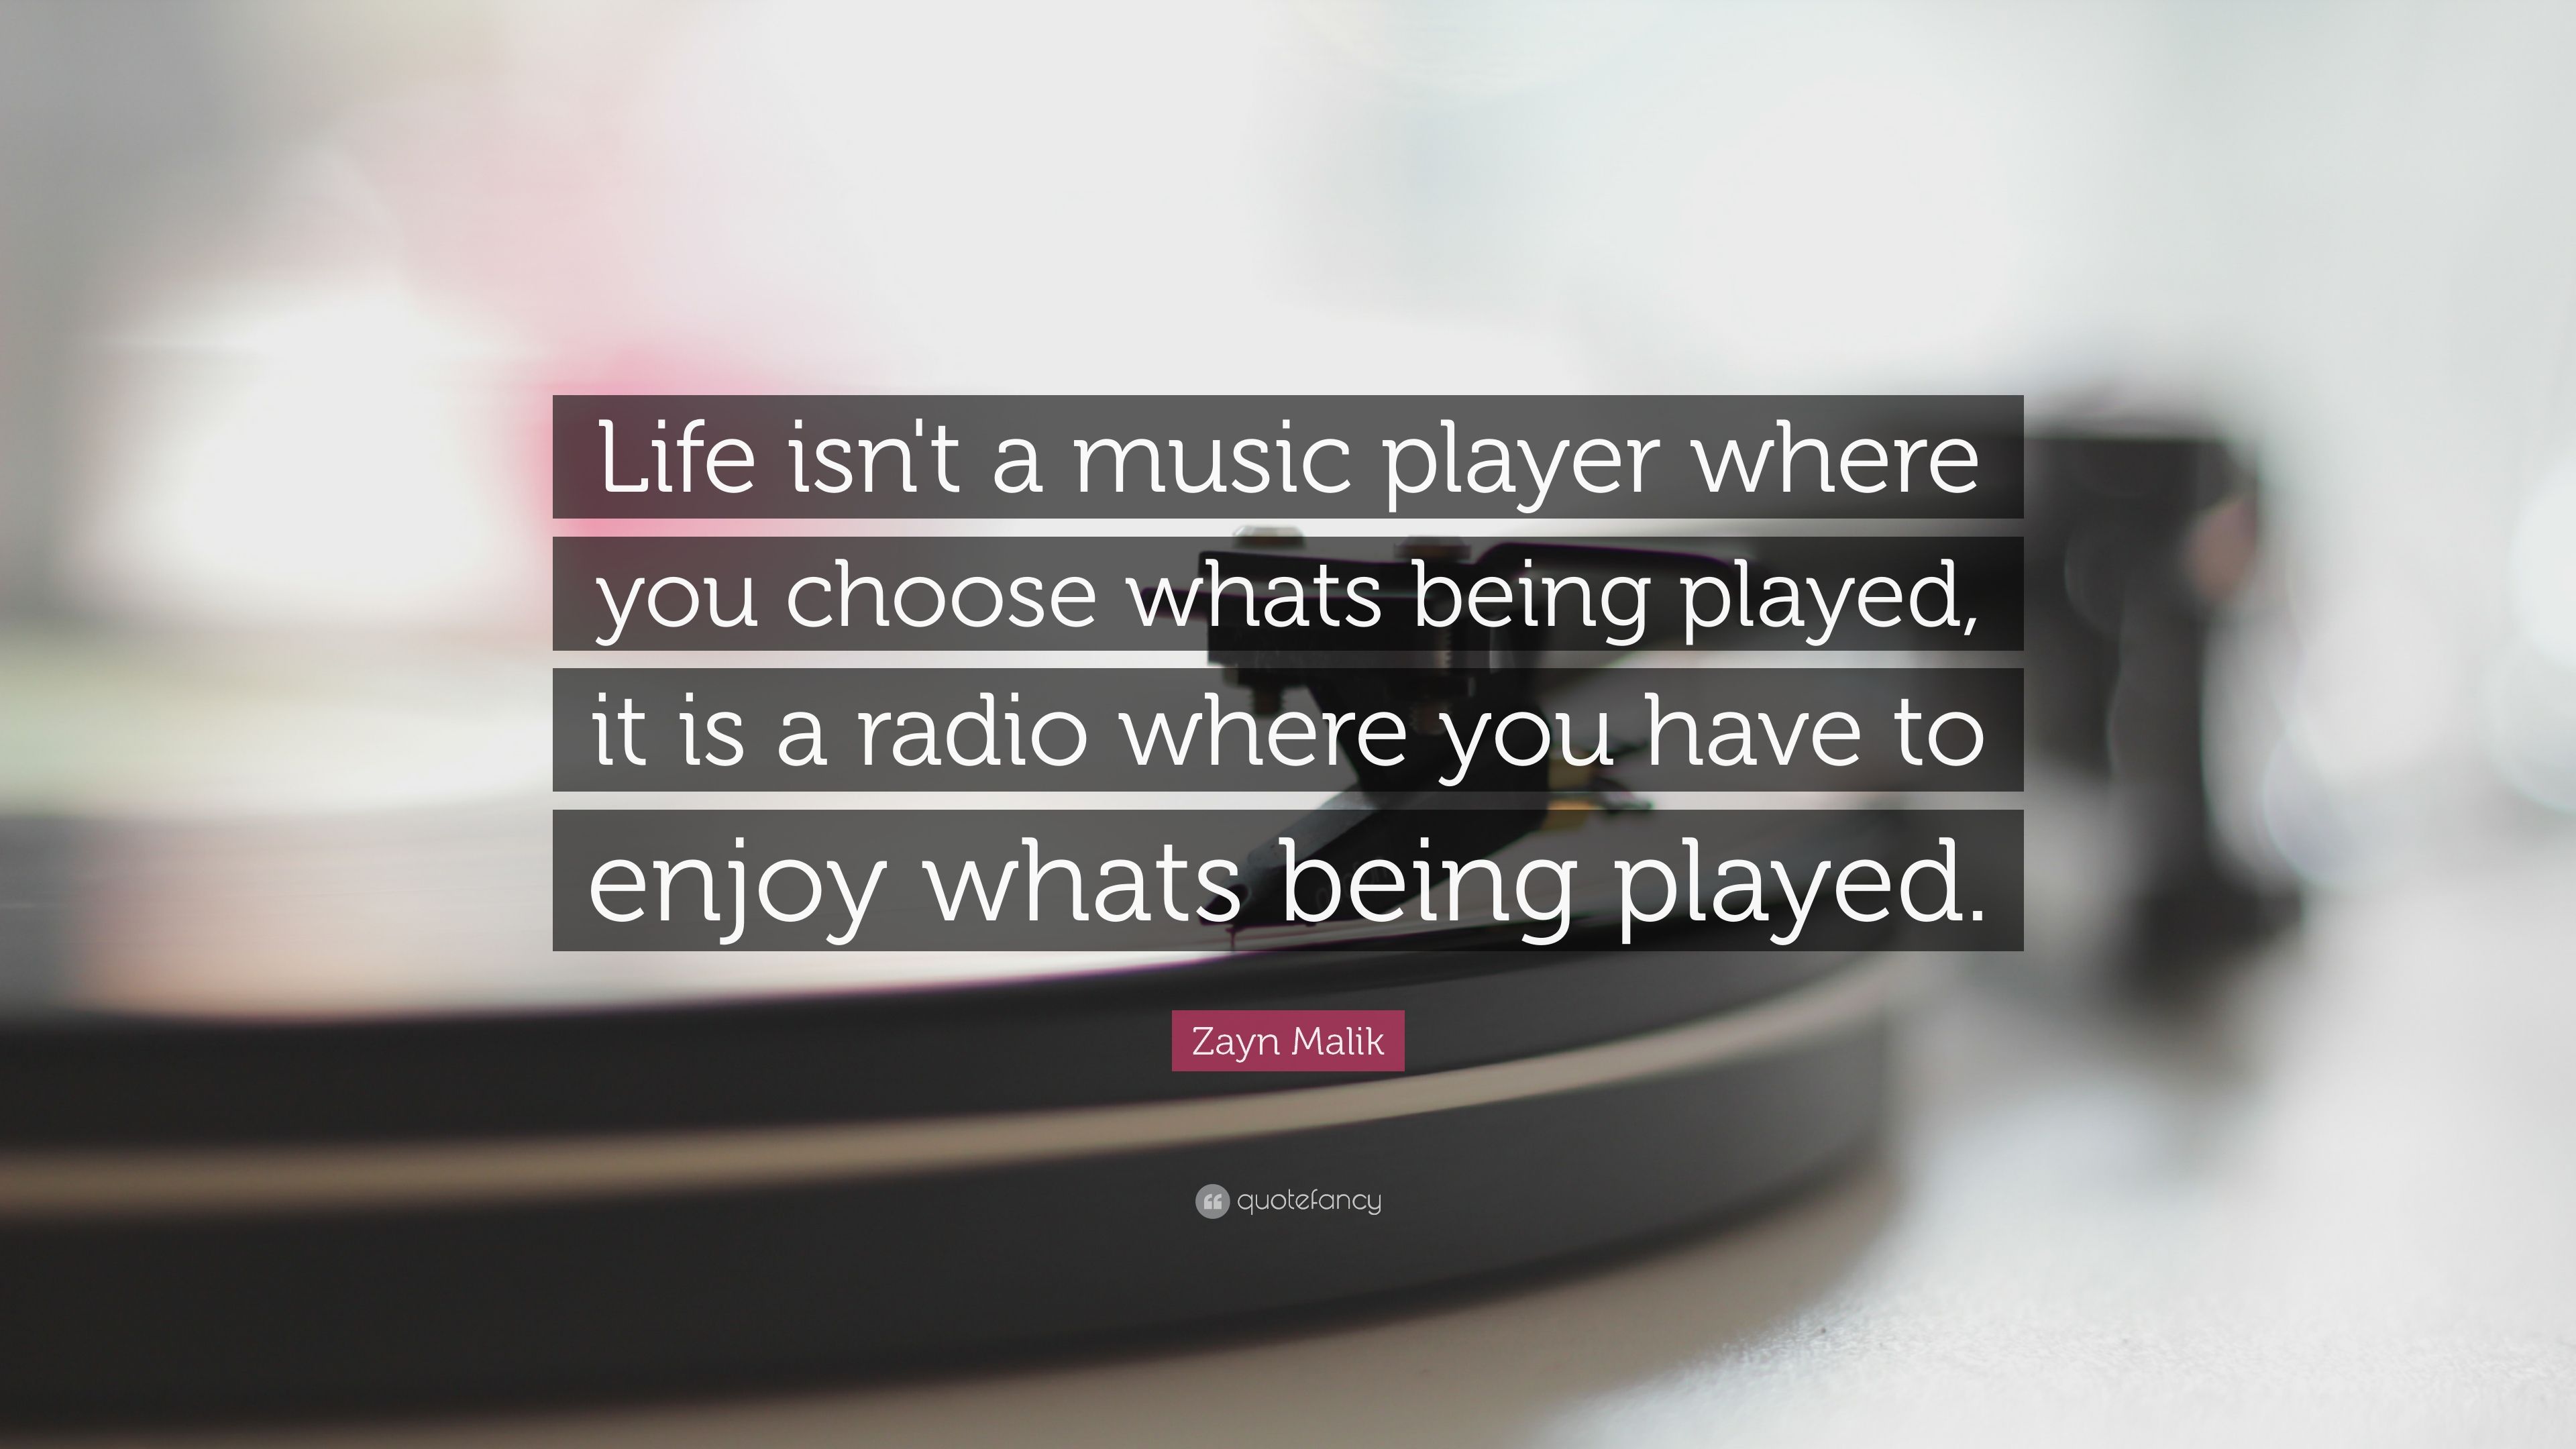 Zayn Malik Quote: "Life isn't a music player where you choose wha...